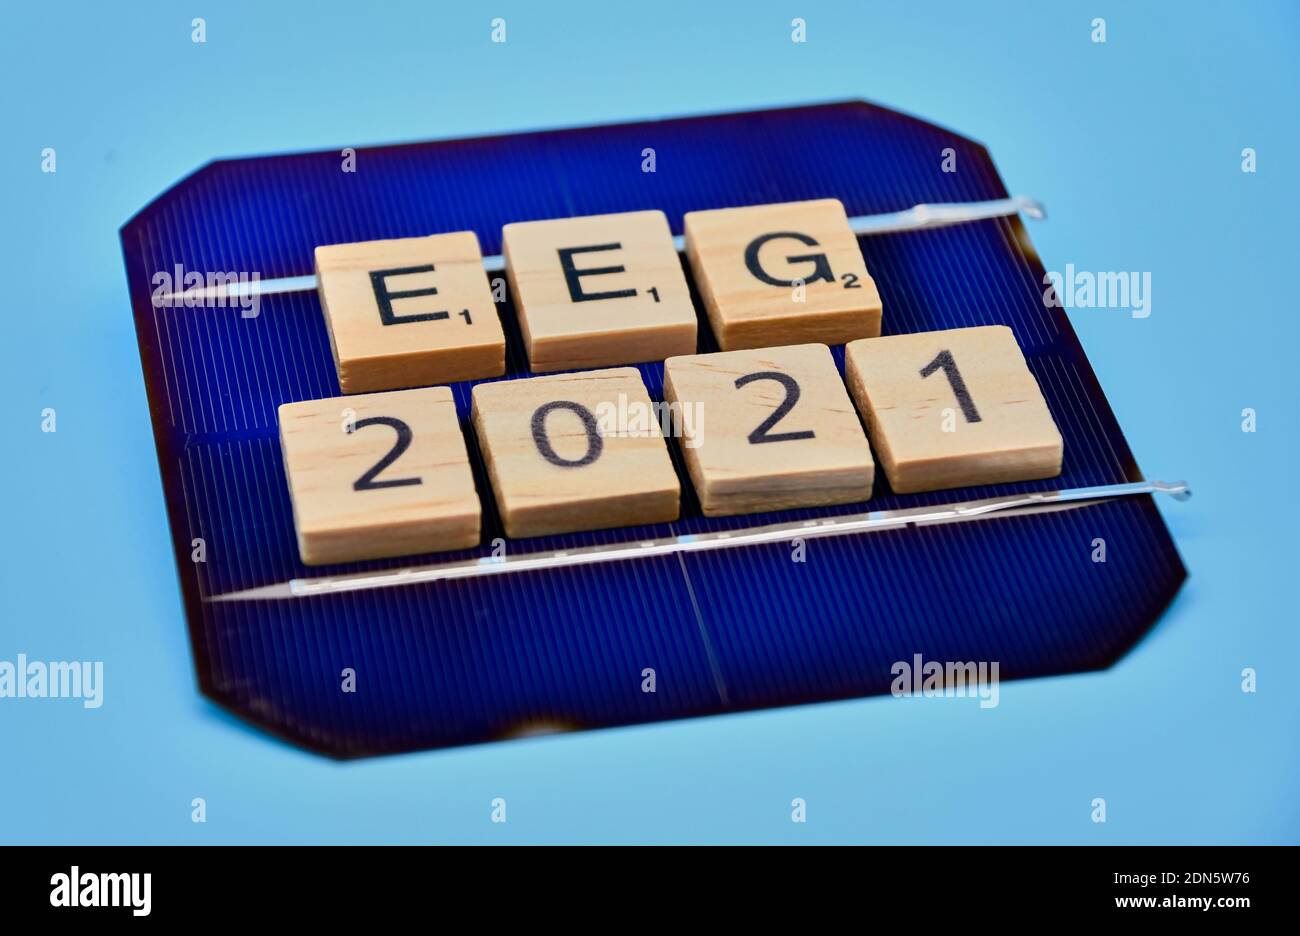 eeg2021 icon Stock Photo